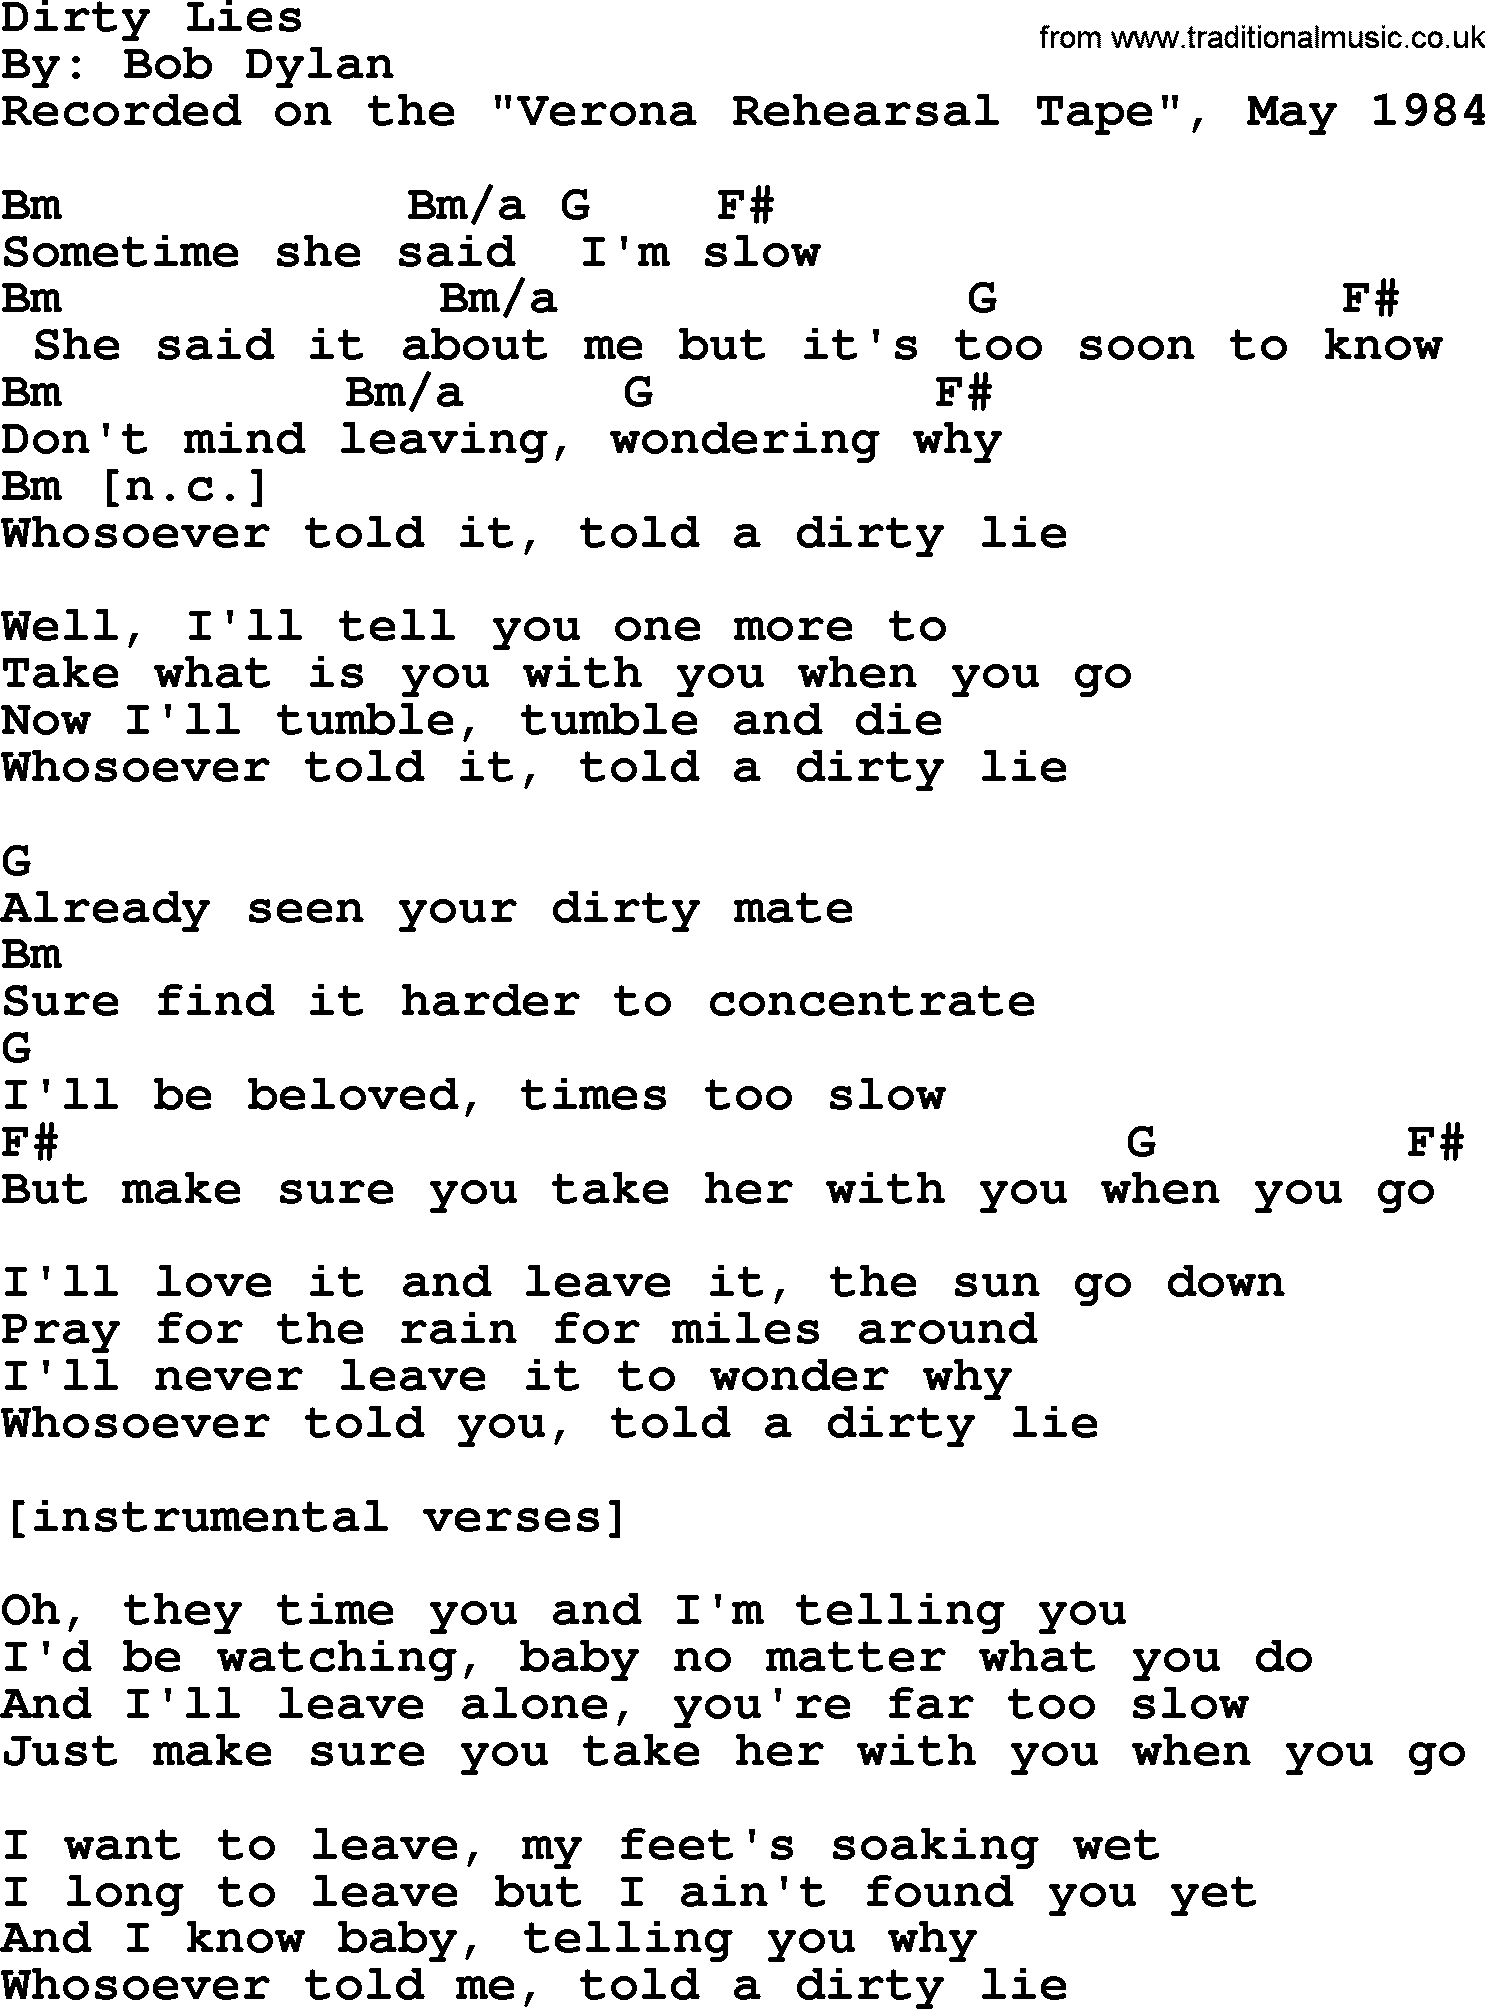 Bob Dylan song, lyrics with chords - Dirty Lies